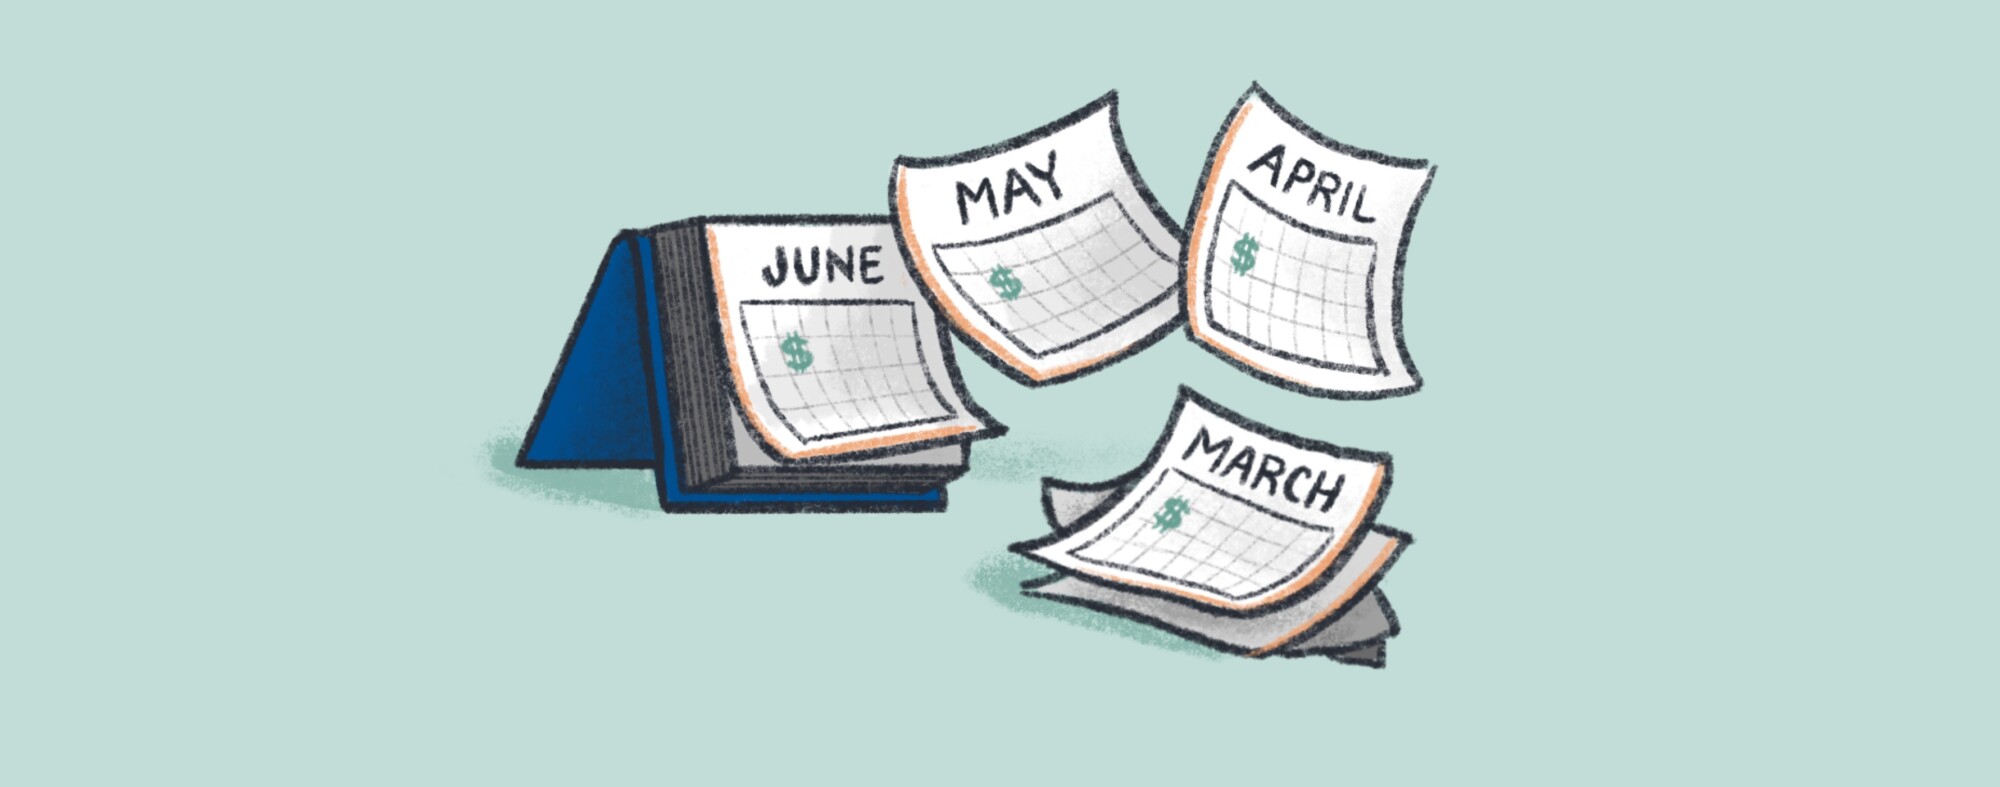 illustration of calendar pages